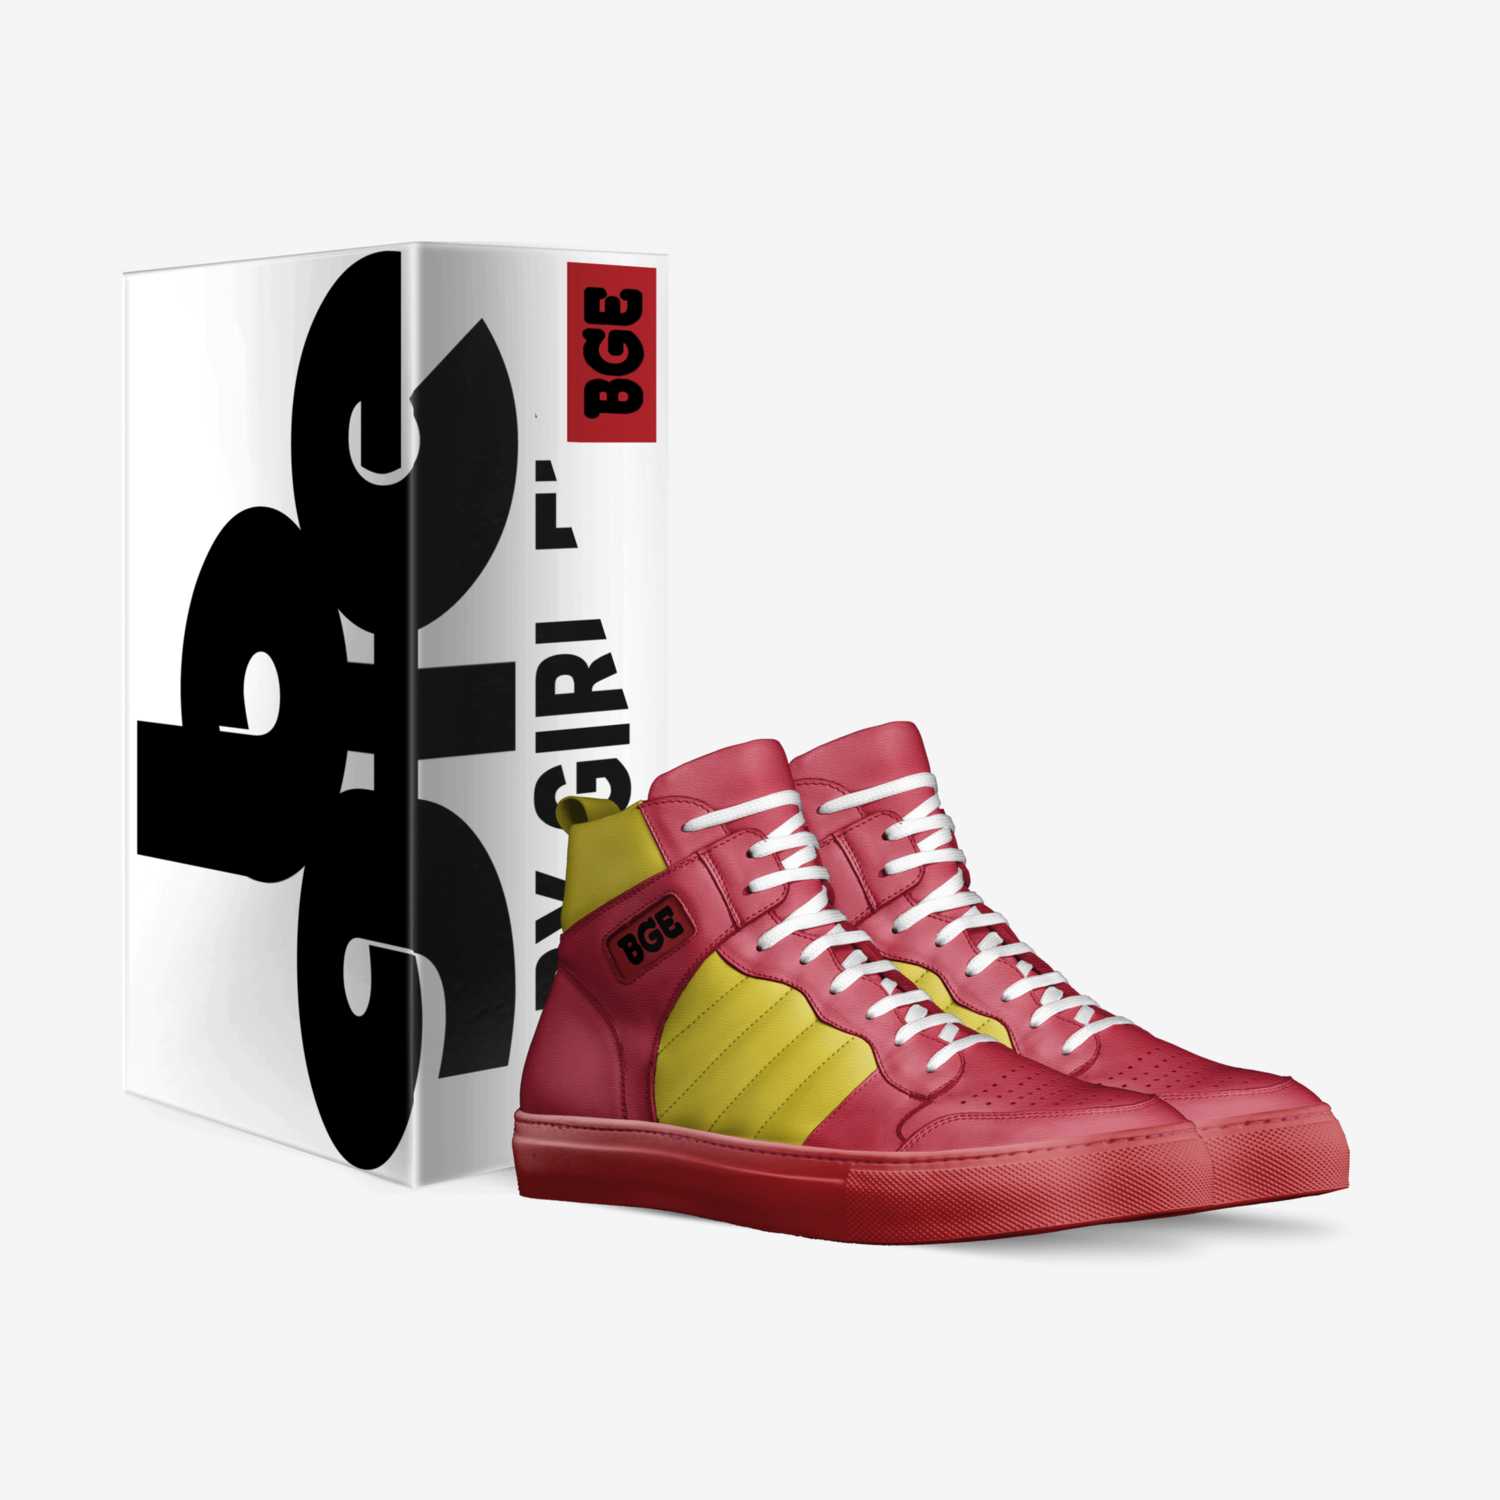 Chiefs SJ1 Salto custom made in Italy shoes by Krishan Myrick | Box view